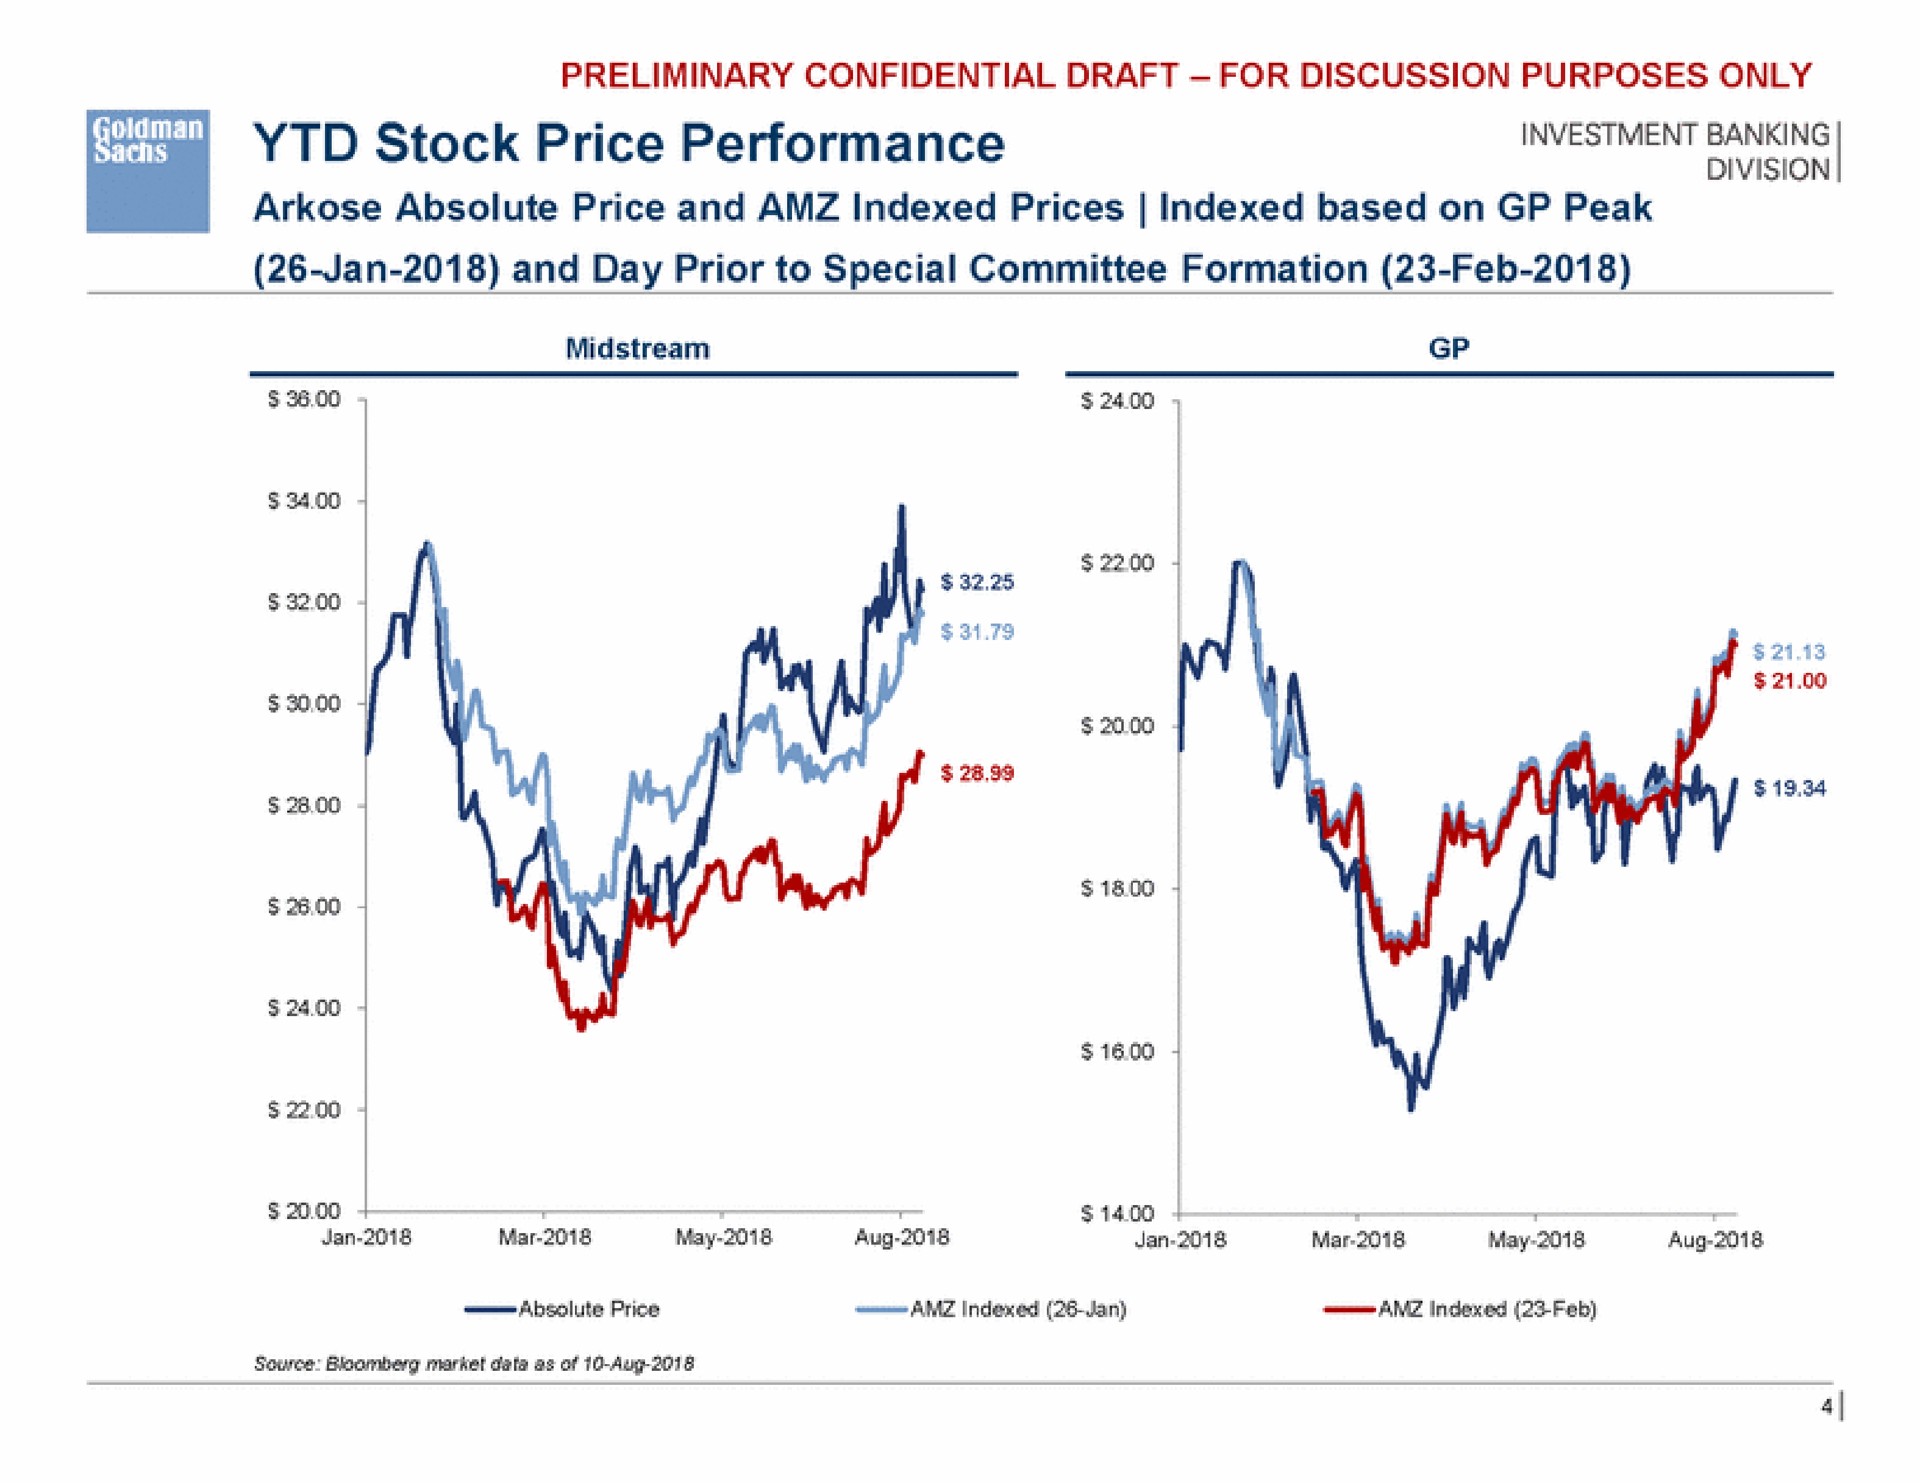 ree stock price performance | Goldman Sachs